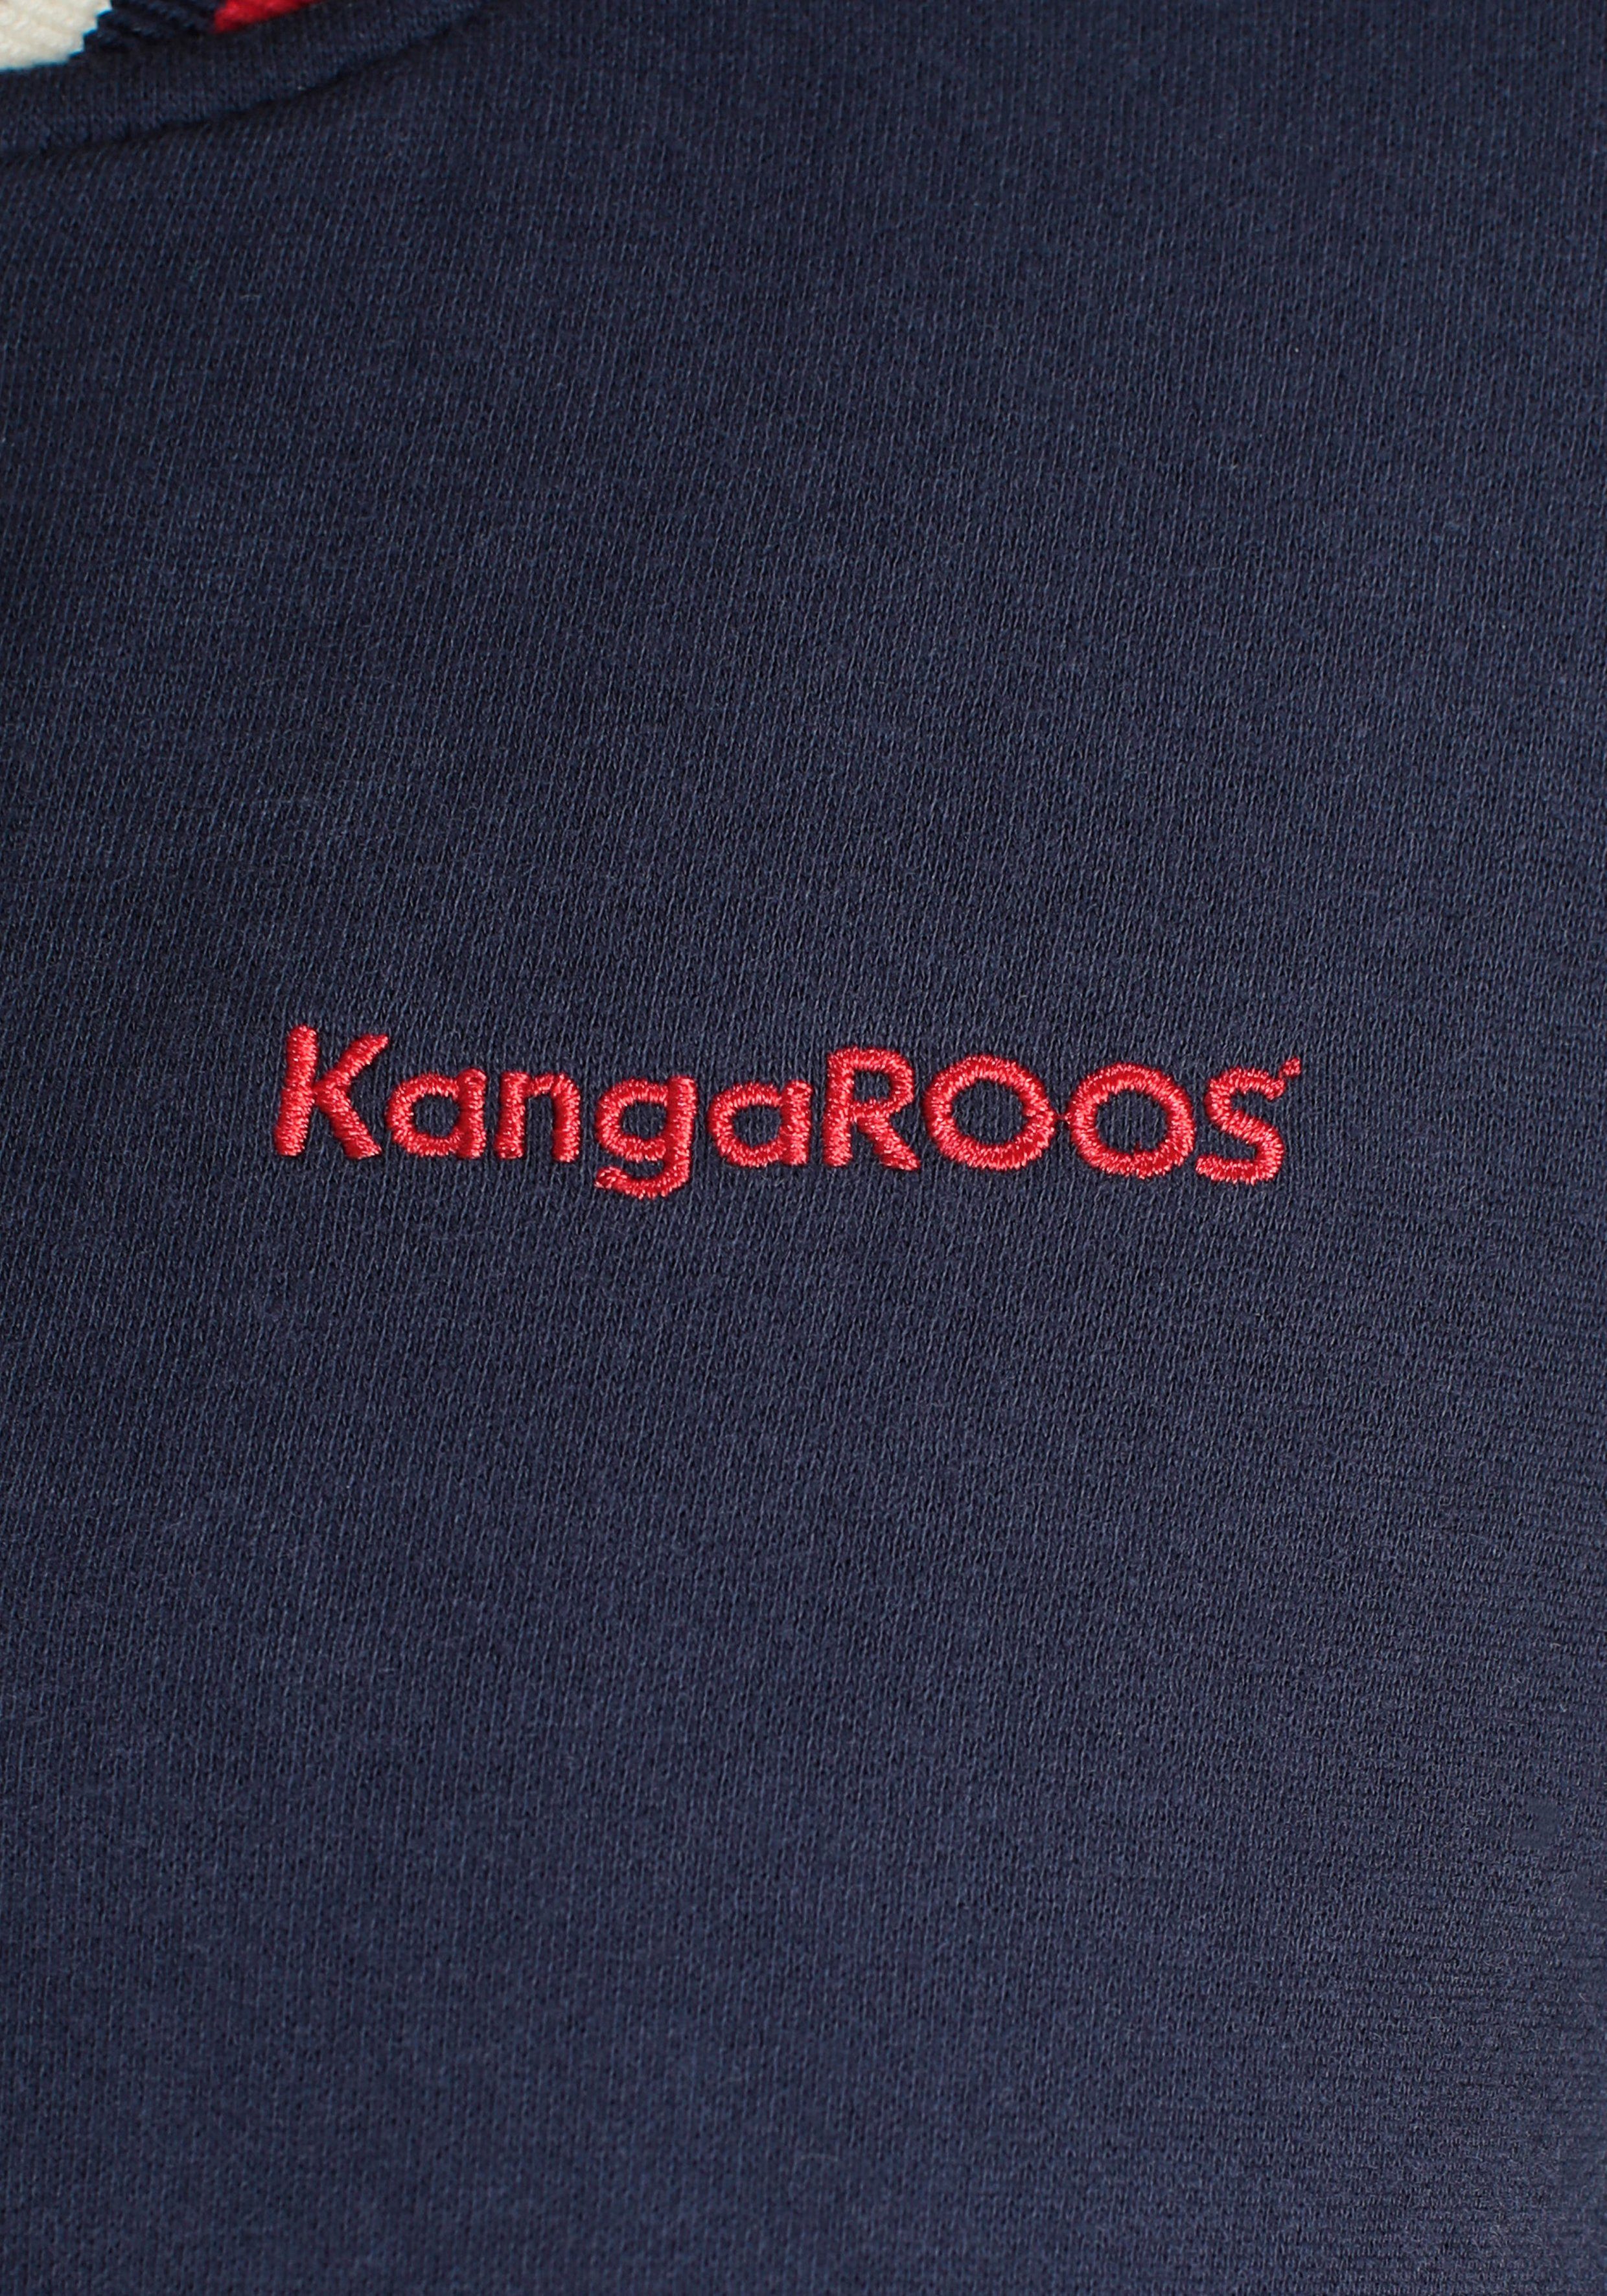 Sweatjacke KangaROOS College-Look coolen im KOLLEKTION - NEUE